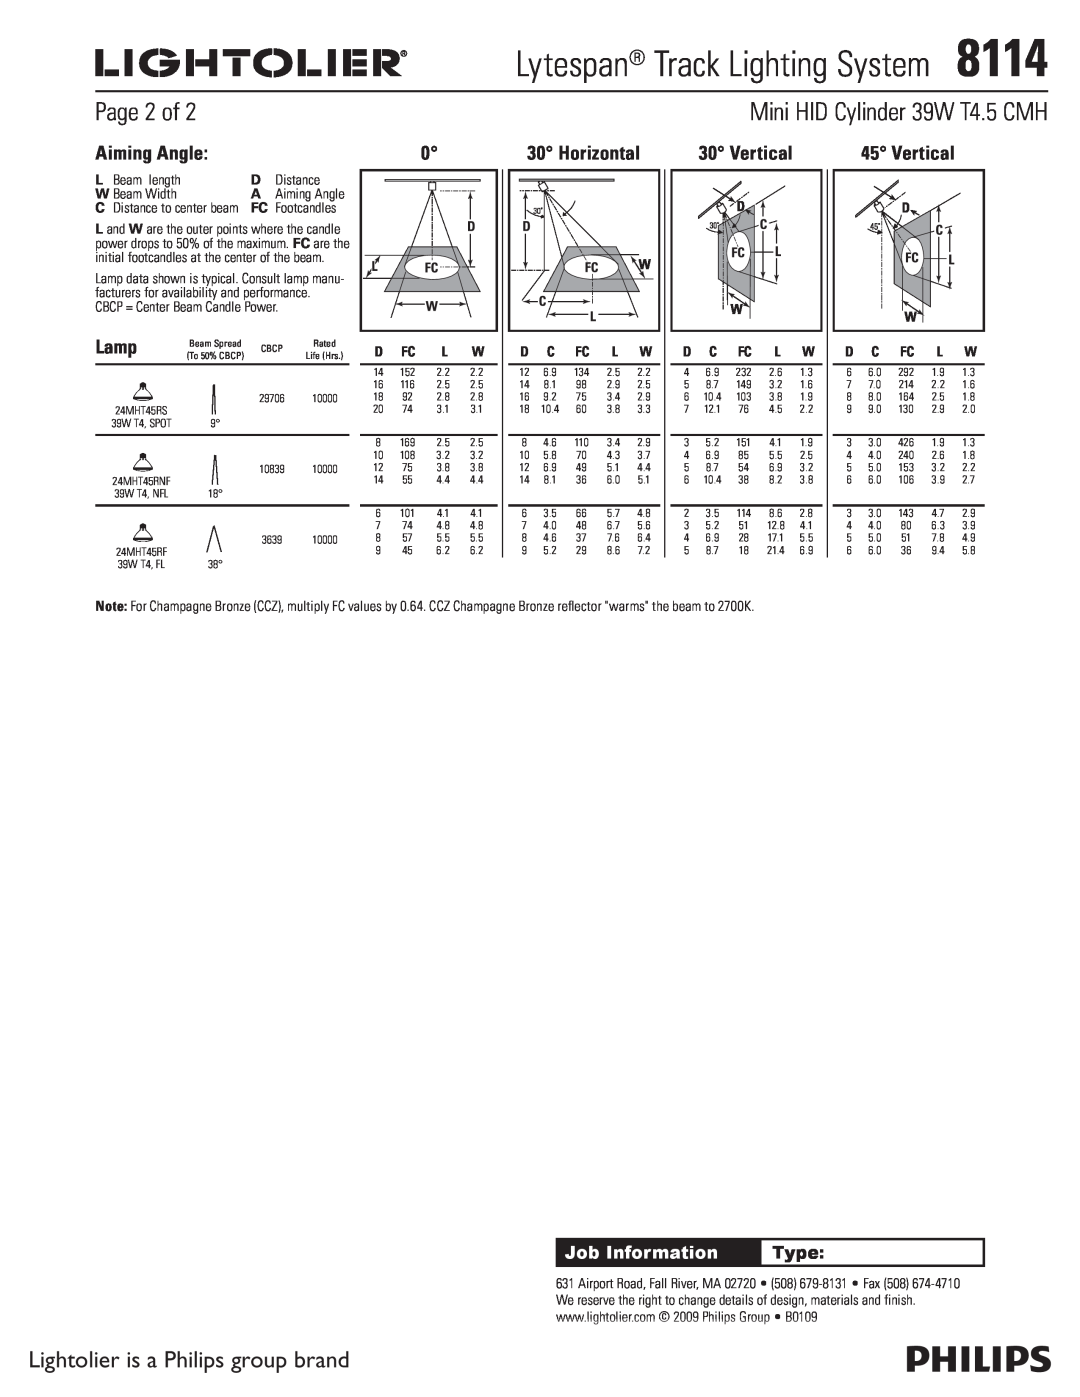 Lightolier Page 2 of, Aiming Angle, Horizontal, Vertical, Lytespan Track Lighting System8114, Lamp, Job Information 